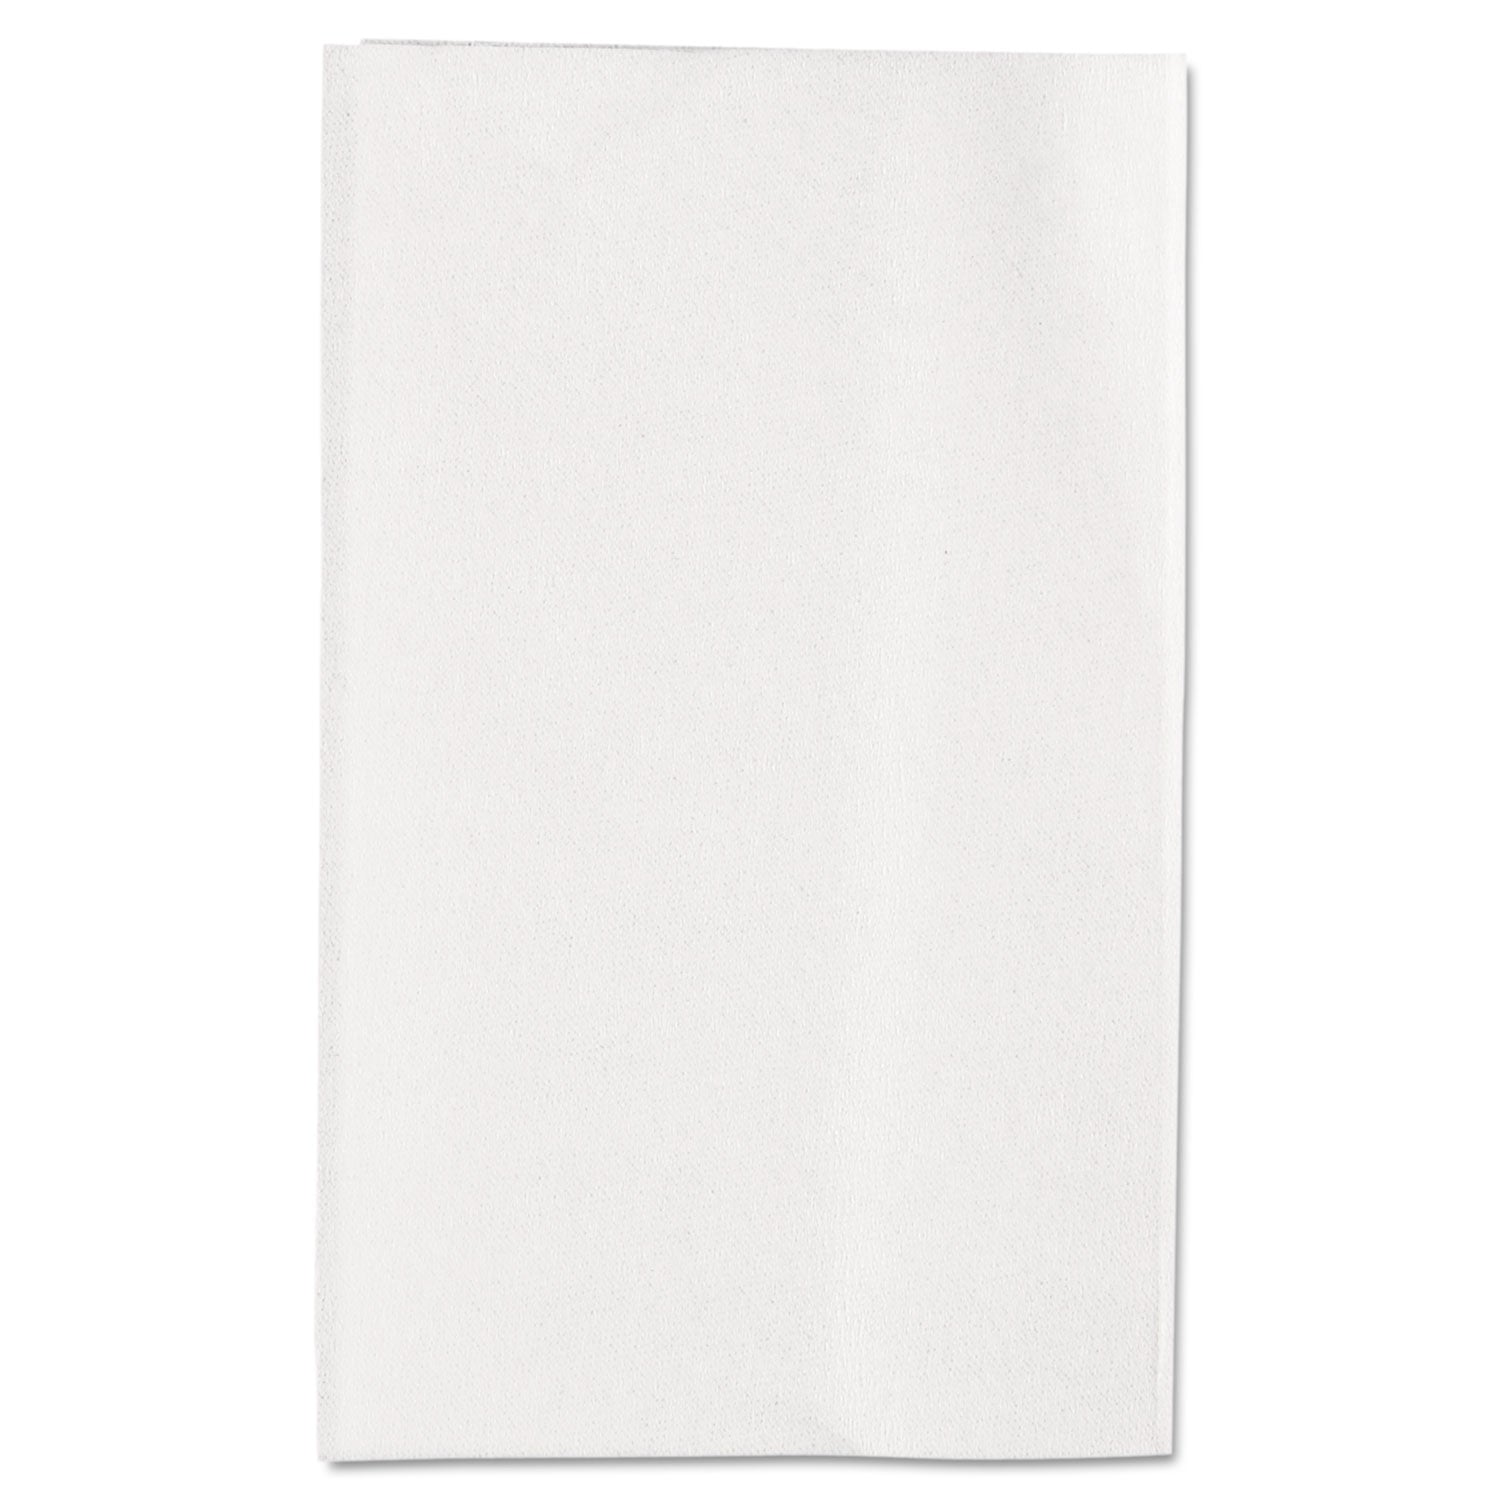 singlefold-interfolded-bathroom-tissue-septic-safe-1-ply-white-400-sheets-pack-60-packs-carton_gpc10101 - 1